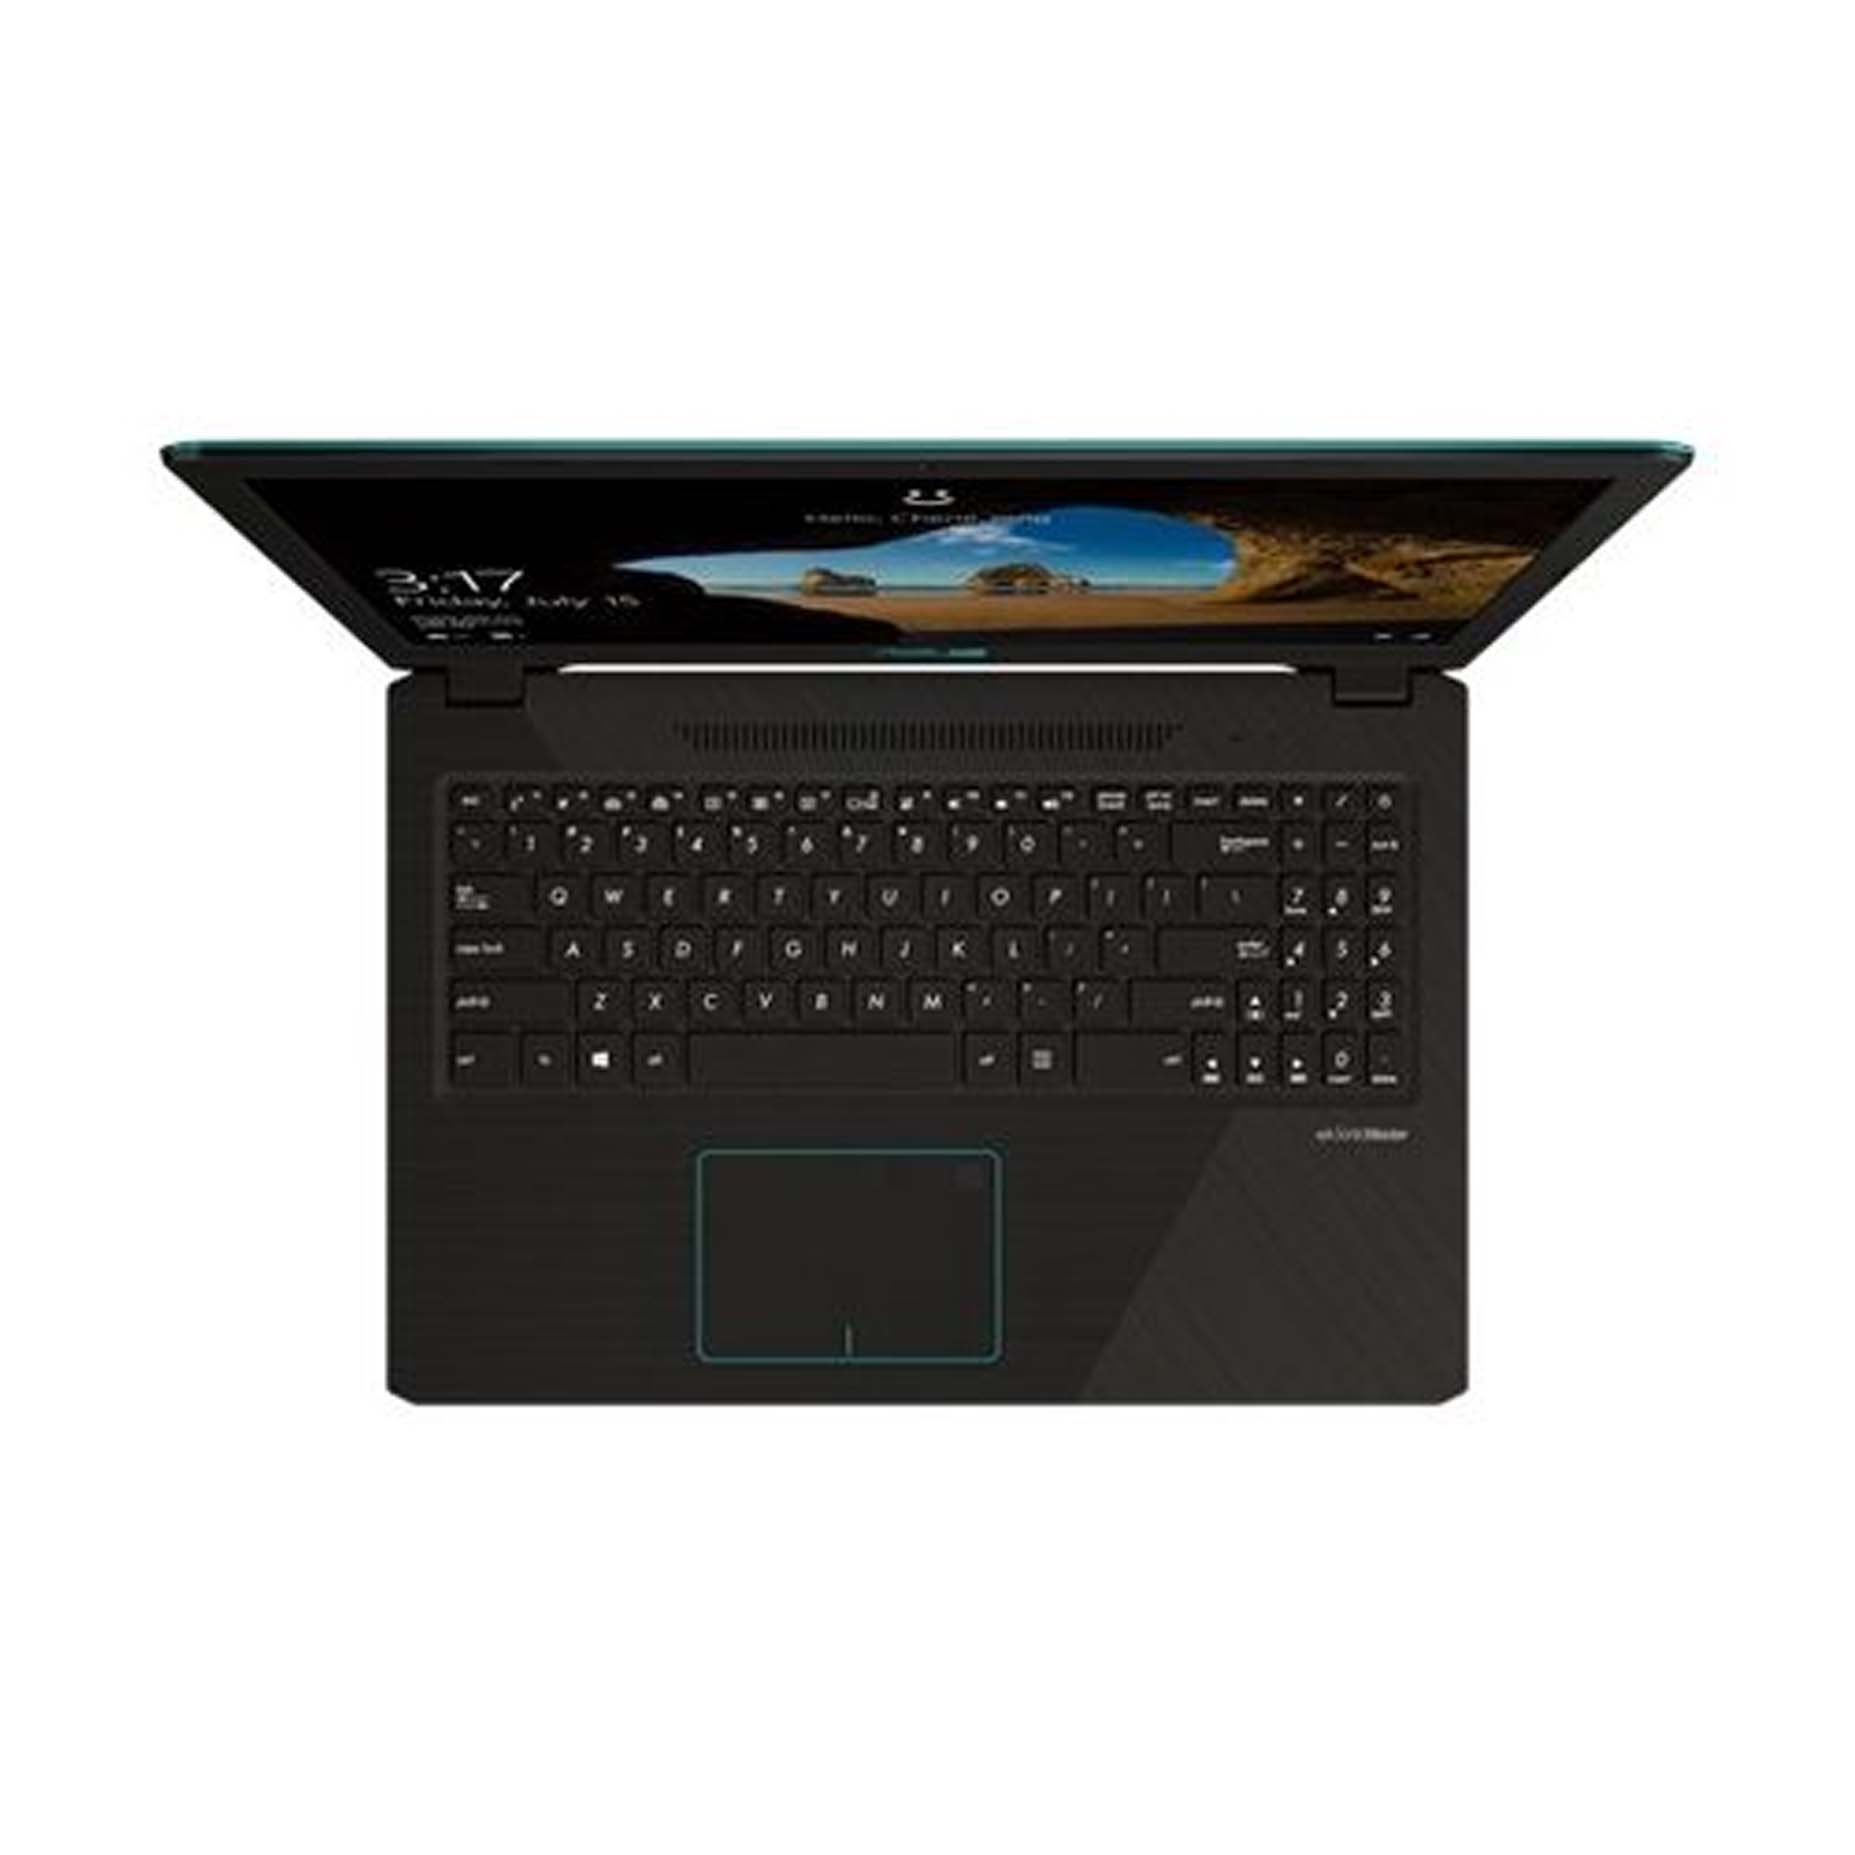 Harga Asus Vivobook Pro F570ZD-R5591T Laptop AMD Ryzen 5 2500U 8GB 1TB 15.6-inch Win 10